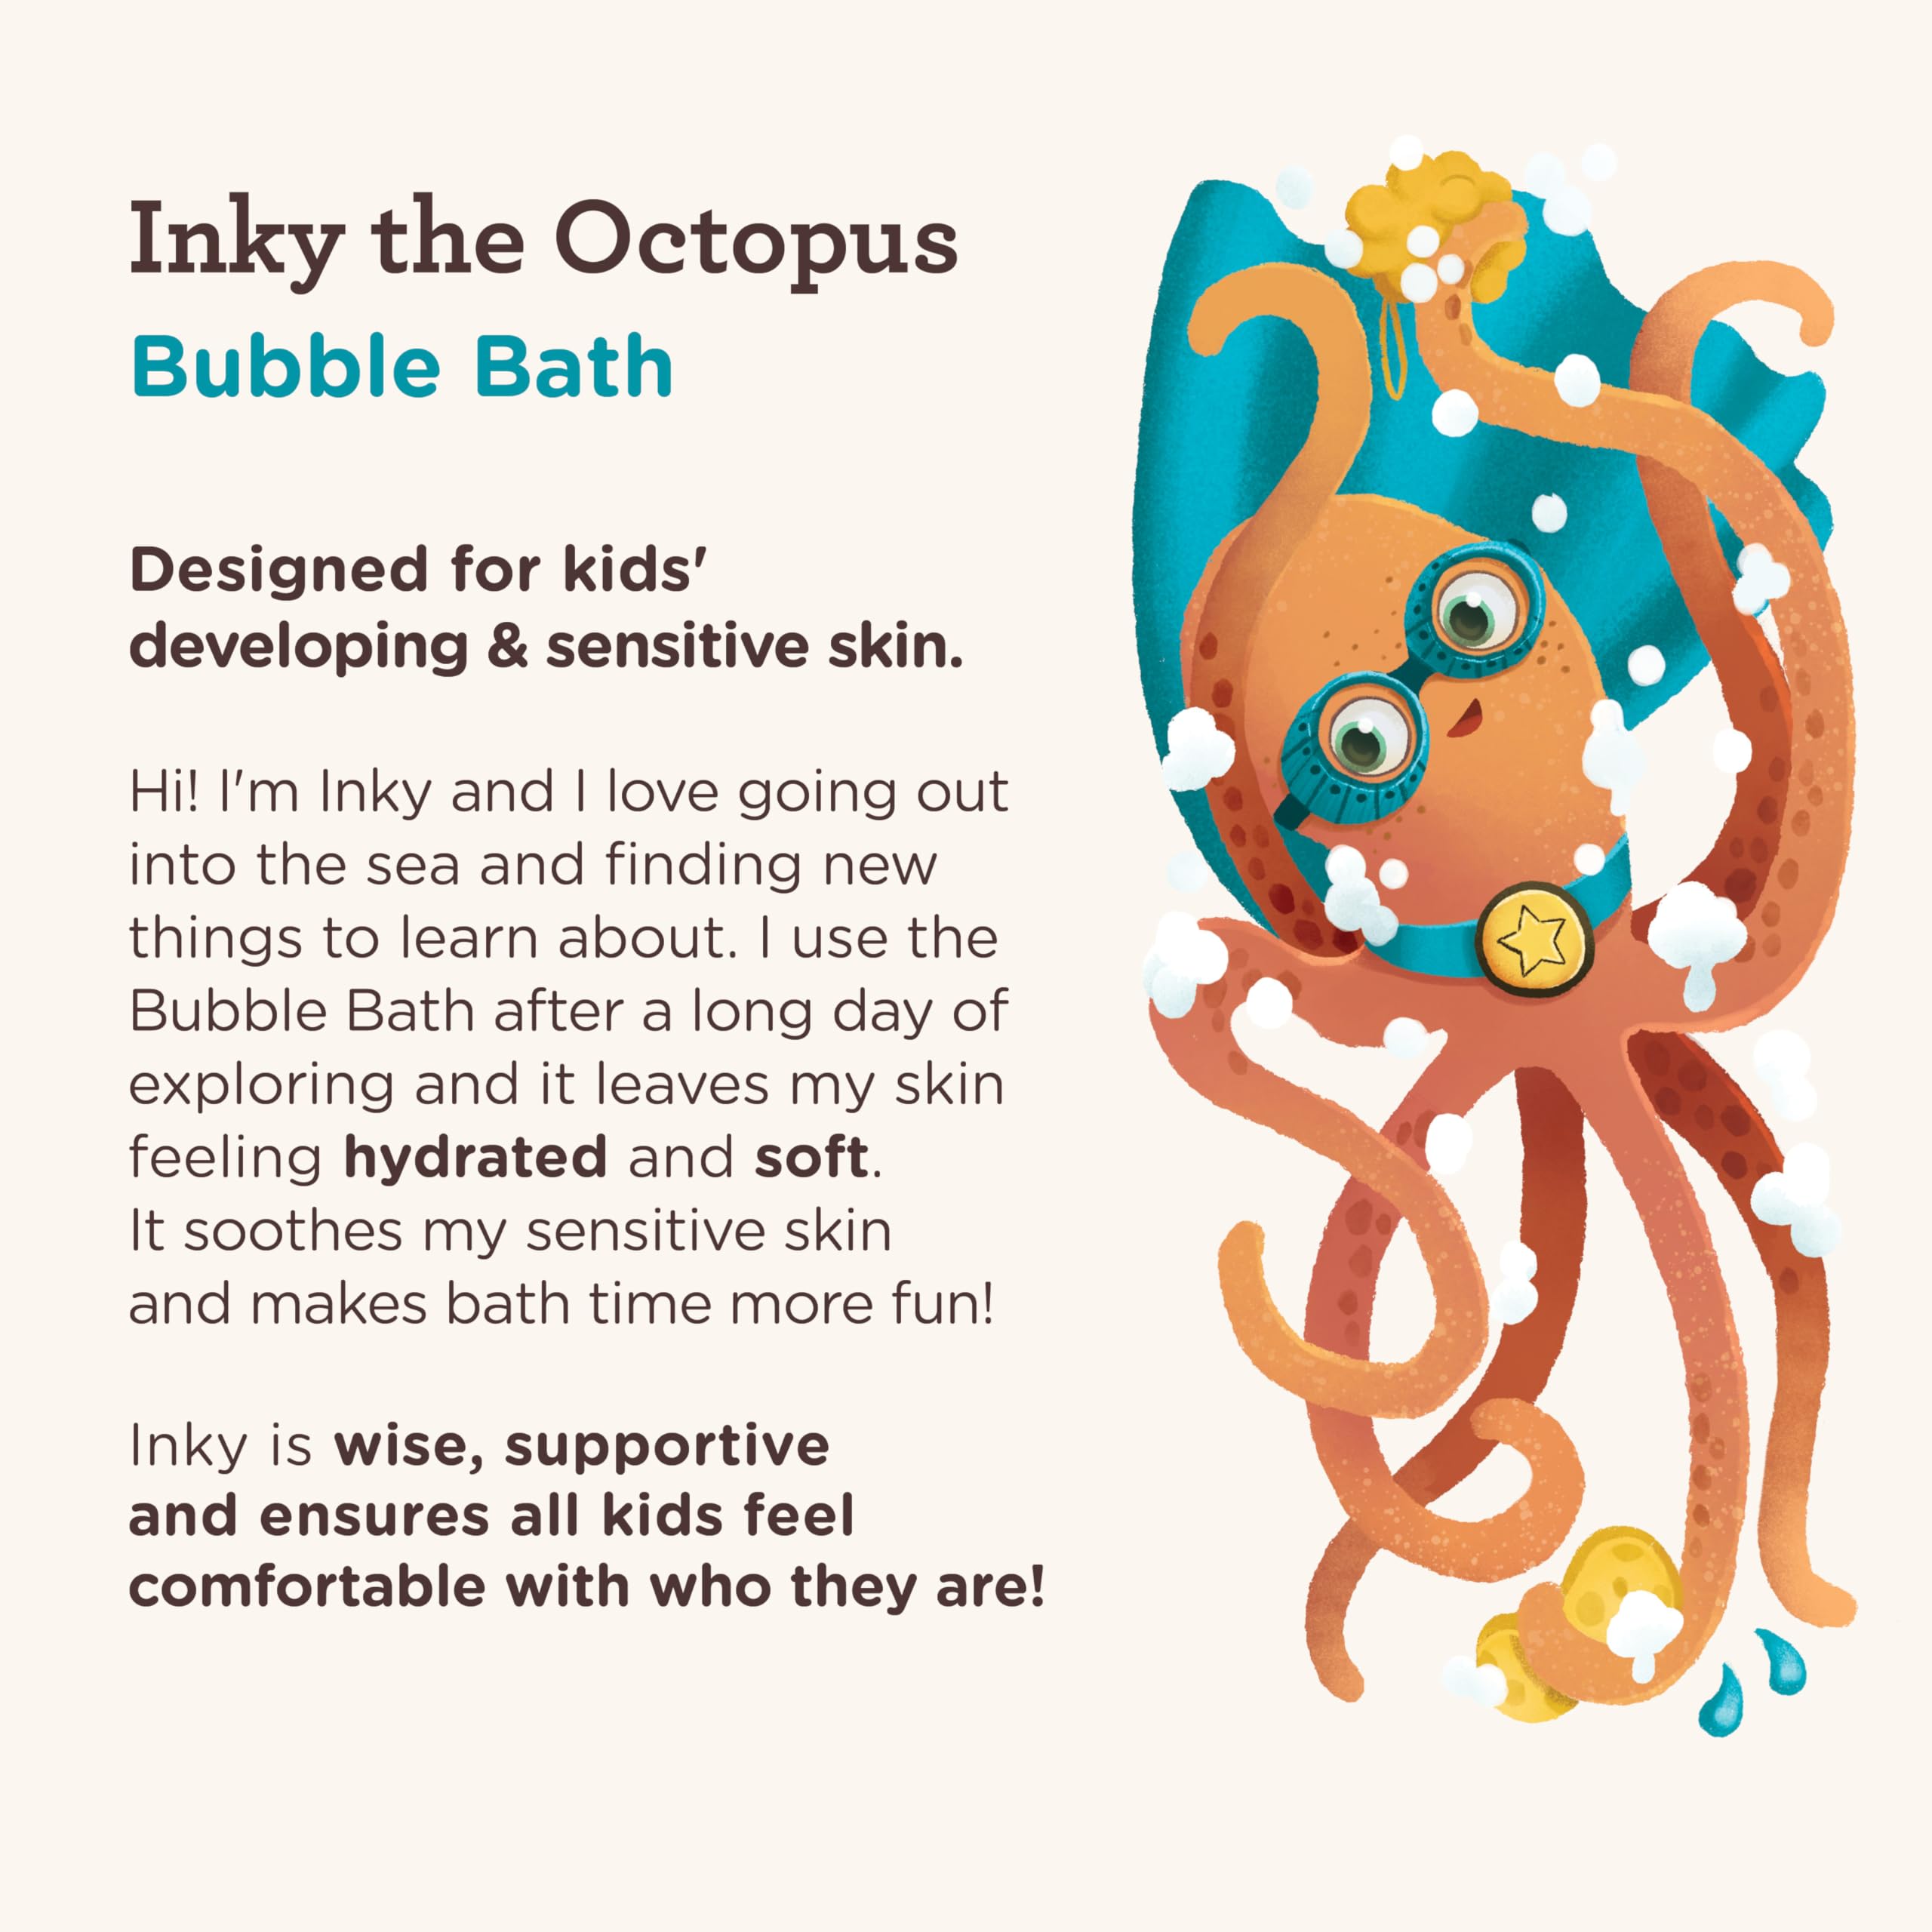 Aveeno Kids Bubble Bath, Children's Bubble Bath for Sensitive Skin with Oat Extract, Kid's Bath Liquid Nourishes Skin & Makes Big, Fluffy Bubbles for Bath Time Fun, Dye-Free, 19.2 fl. Oz